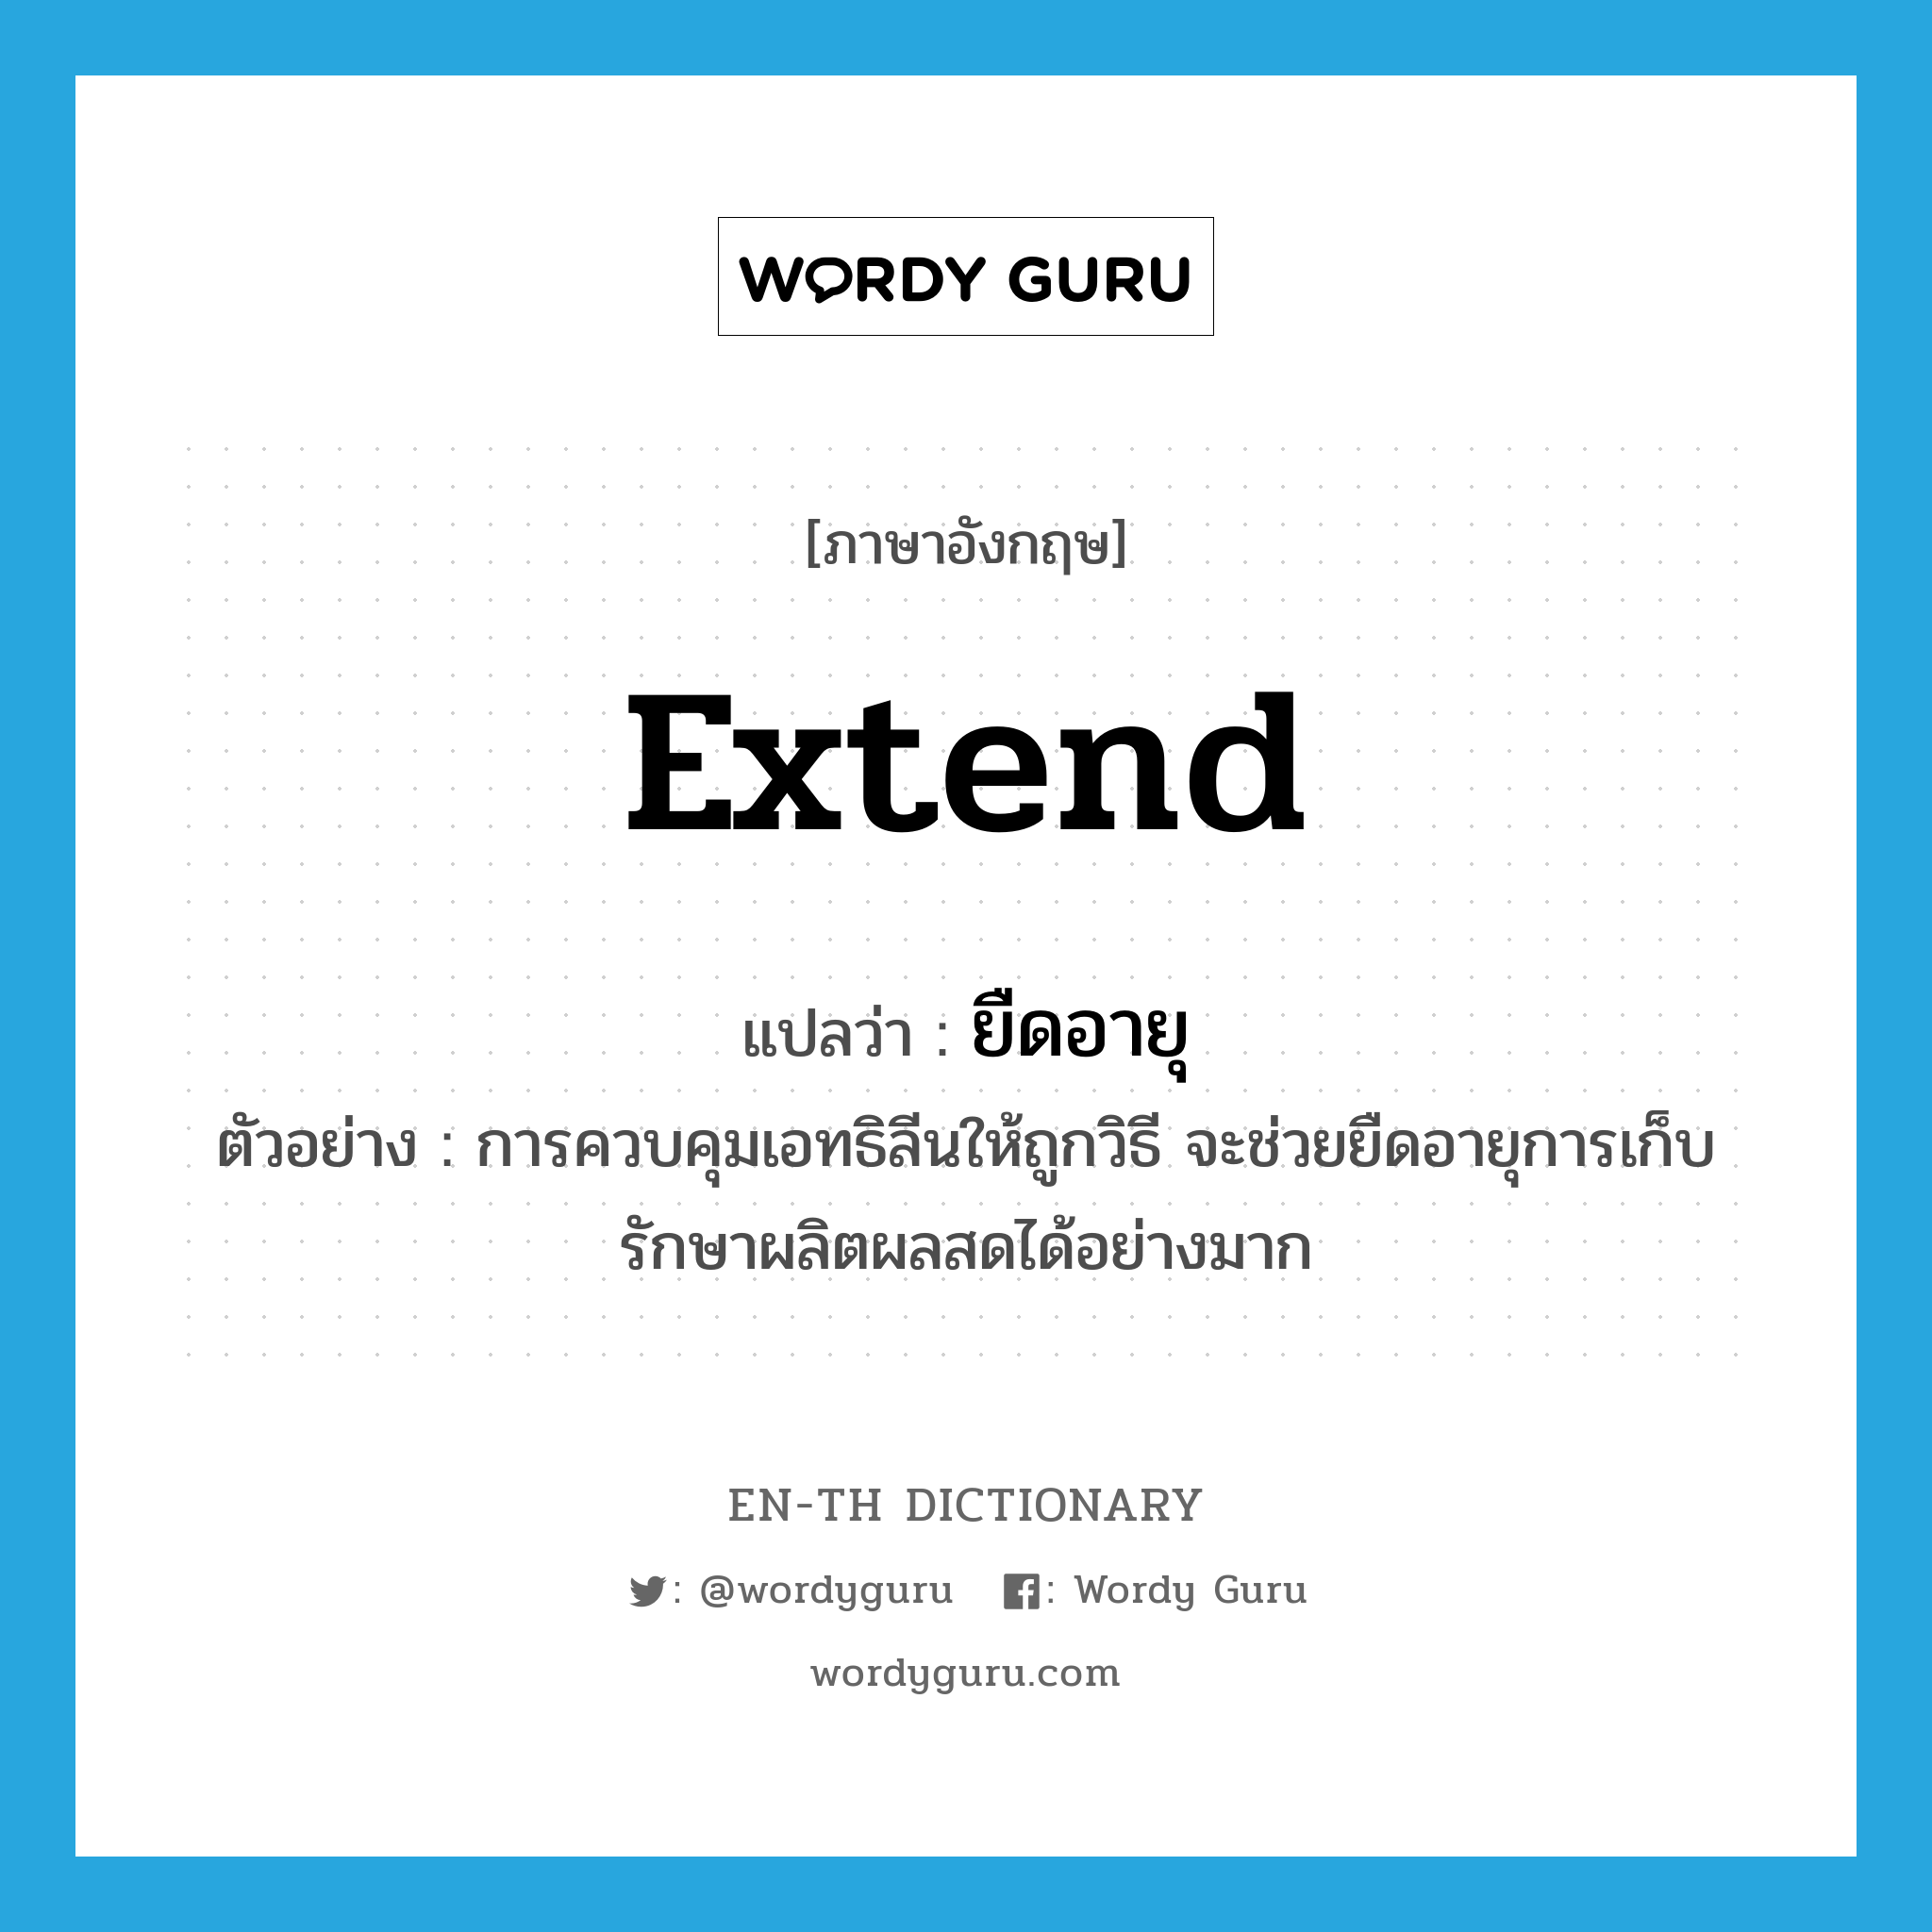 extend แปลว่า?, คำศัพท์ภาษาอังกฤษ extend แปลว่า ยืดอายุ ประเภท V ตัวอย่าง การควบคุมเอทธิลีนให้ถูกวิธี จะช่วยยืดอายุการเก็บรักษาผลิตผลสดได้อย่างมาก หมวด V